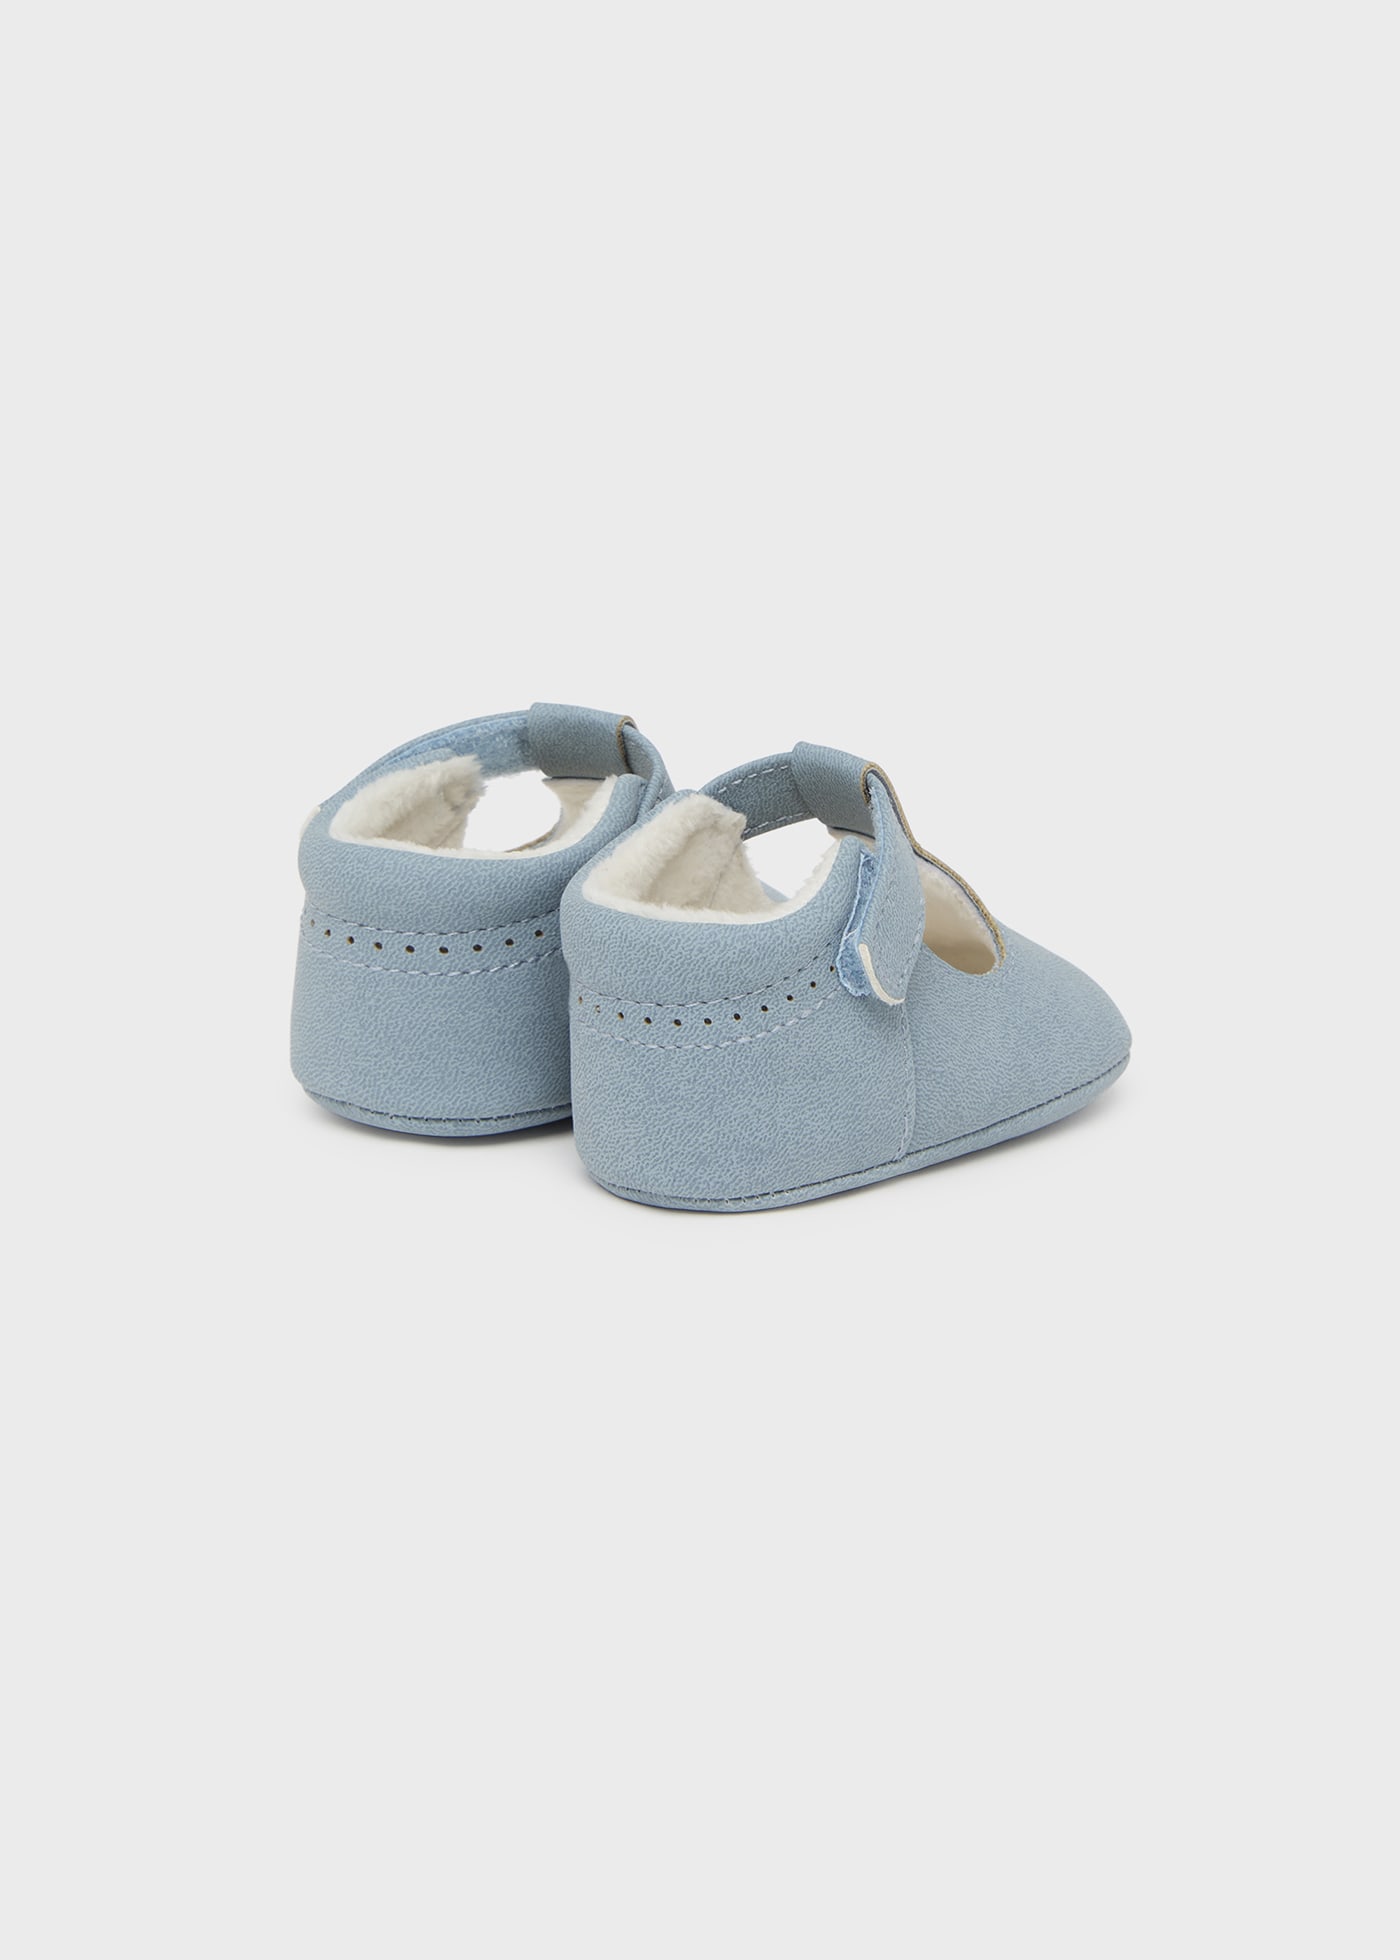 Zapato pepito recién nacido